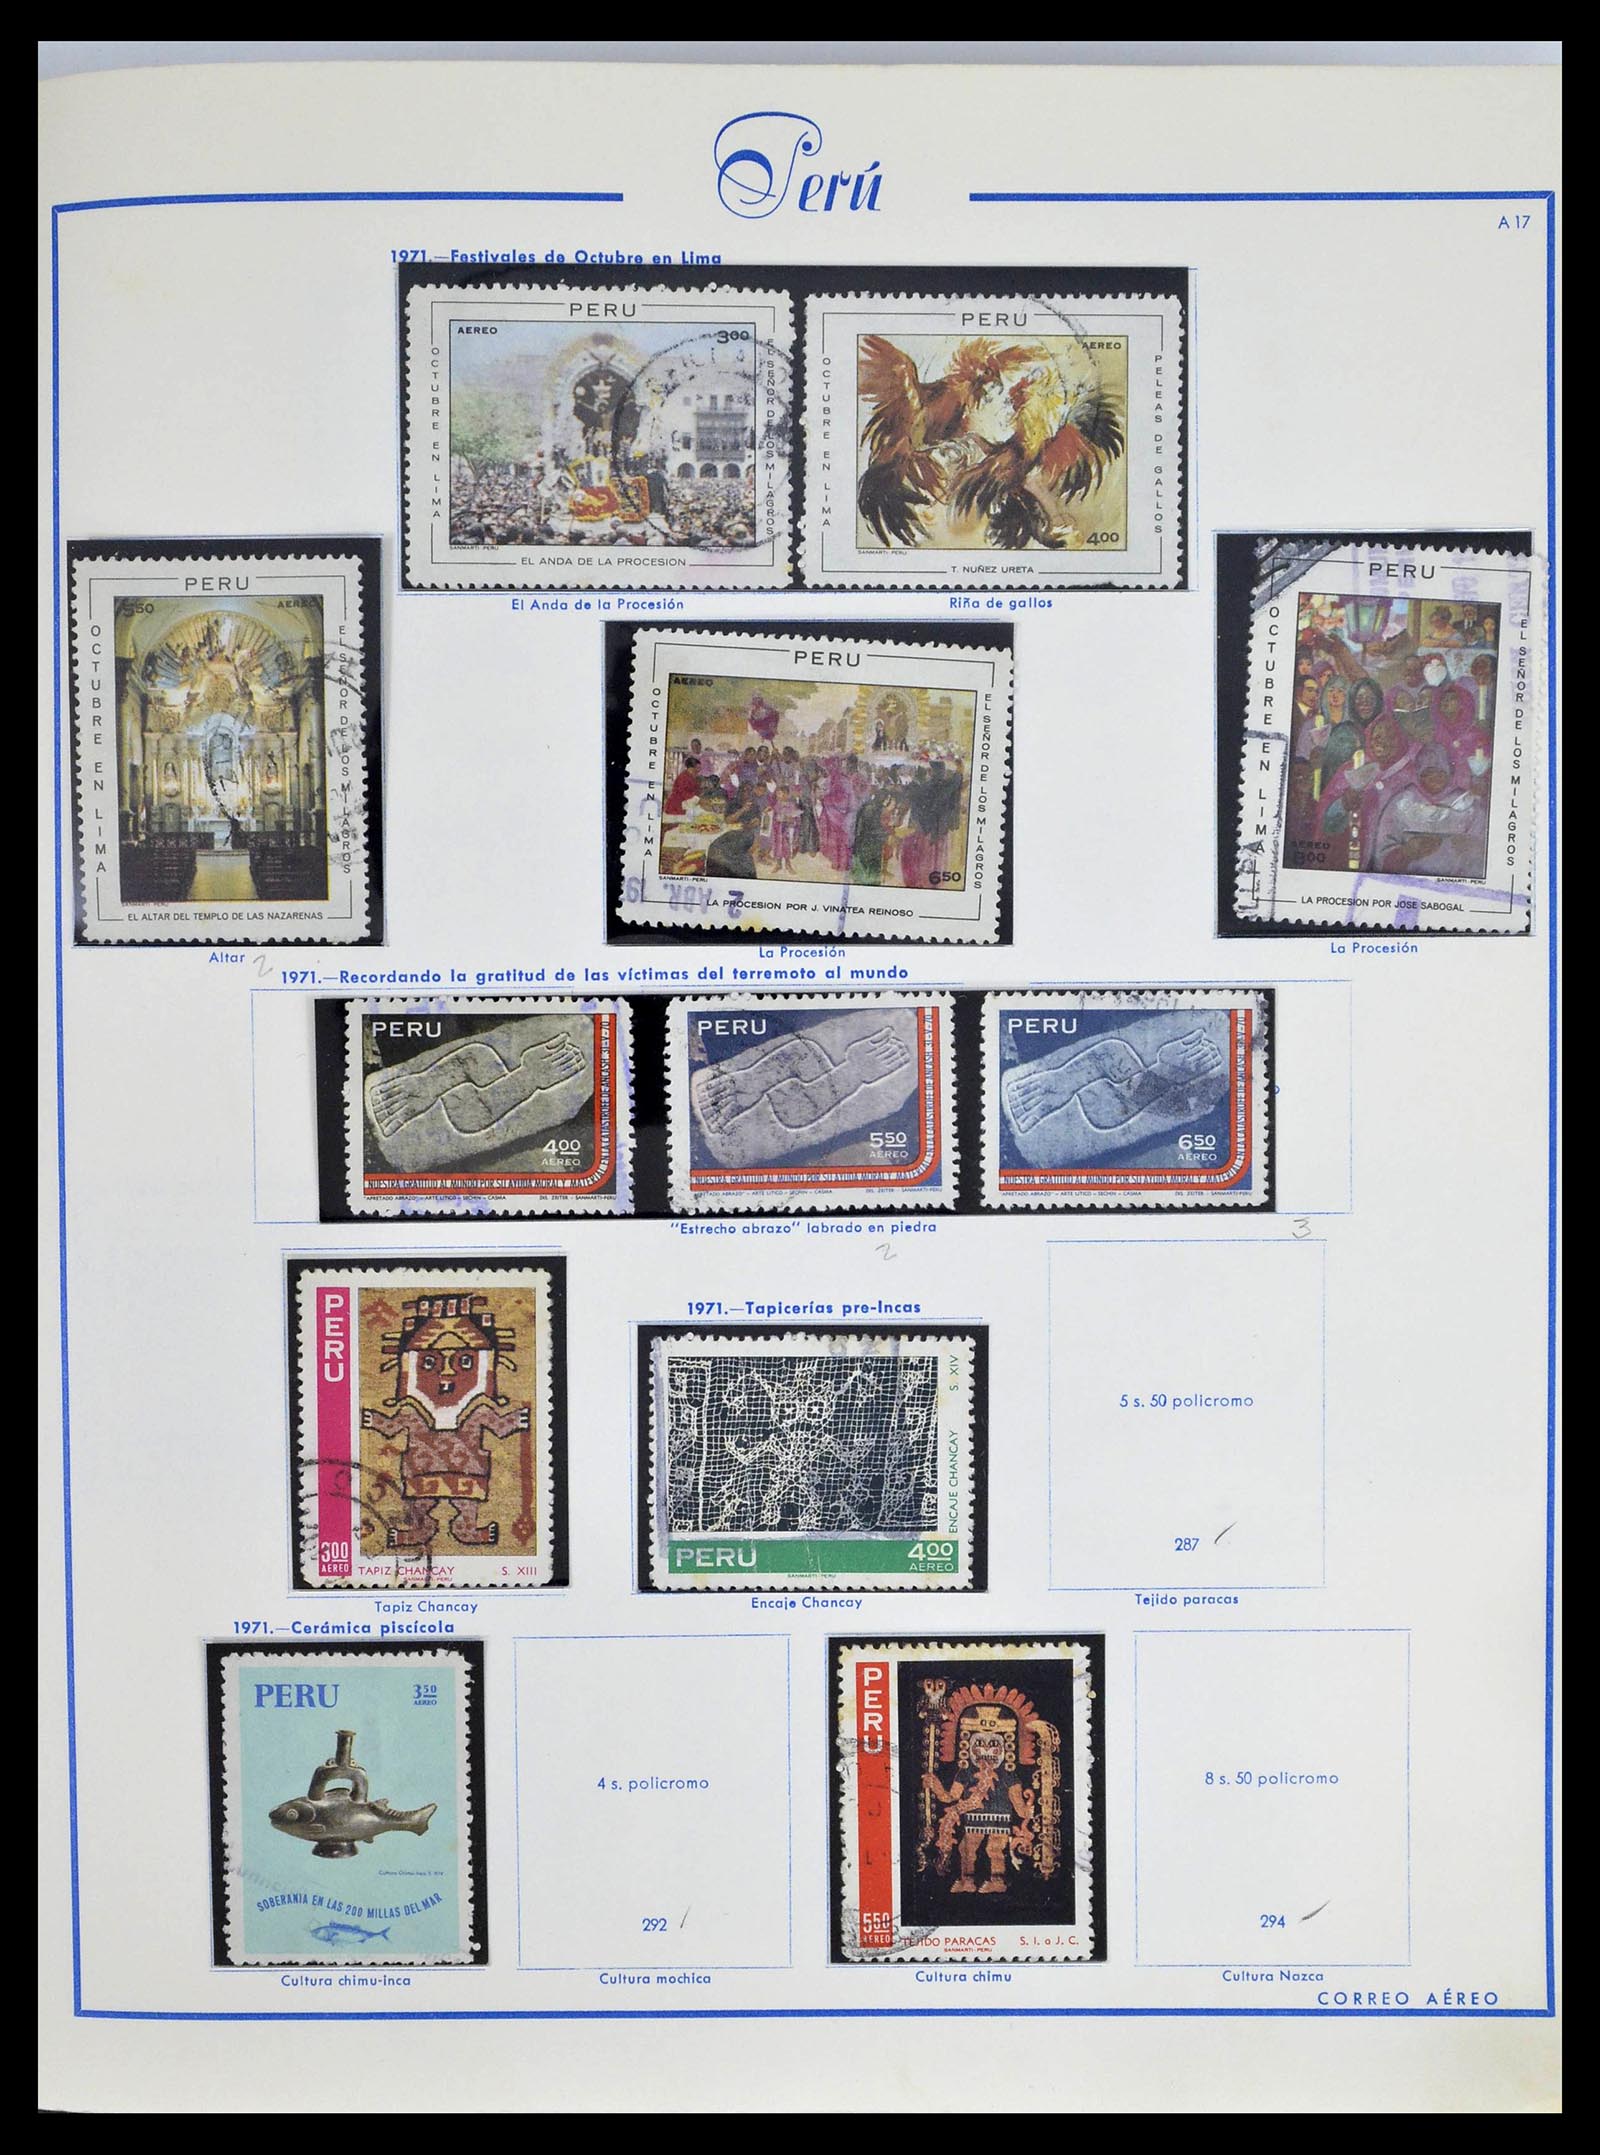 39214 0068 - Stamp collection 39214 Peru 1857-1981.